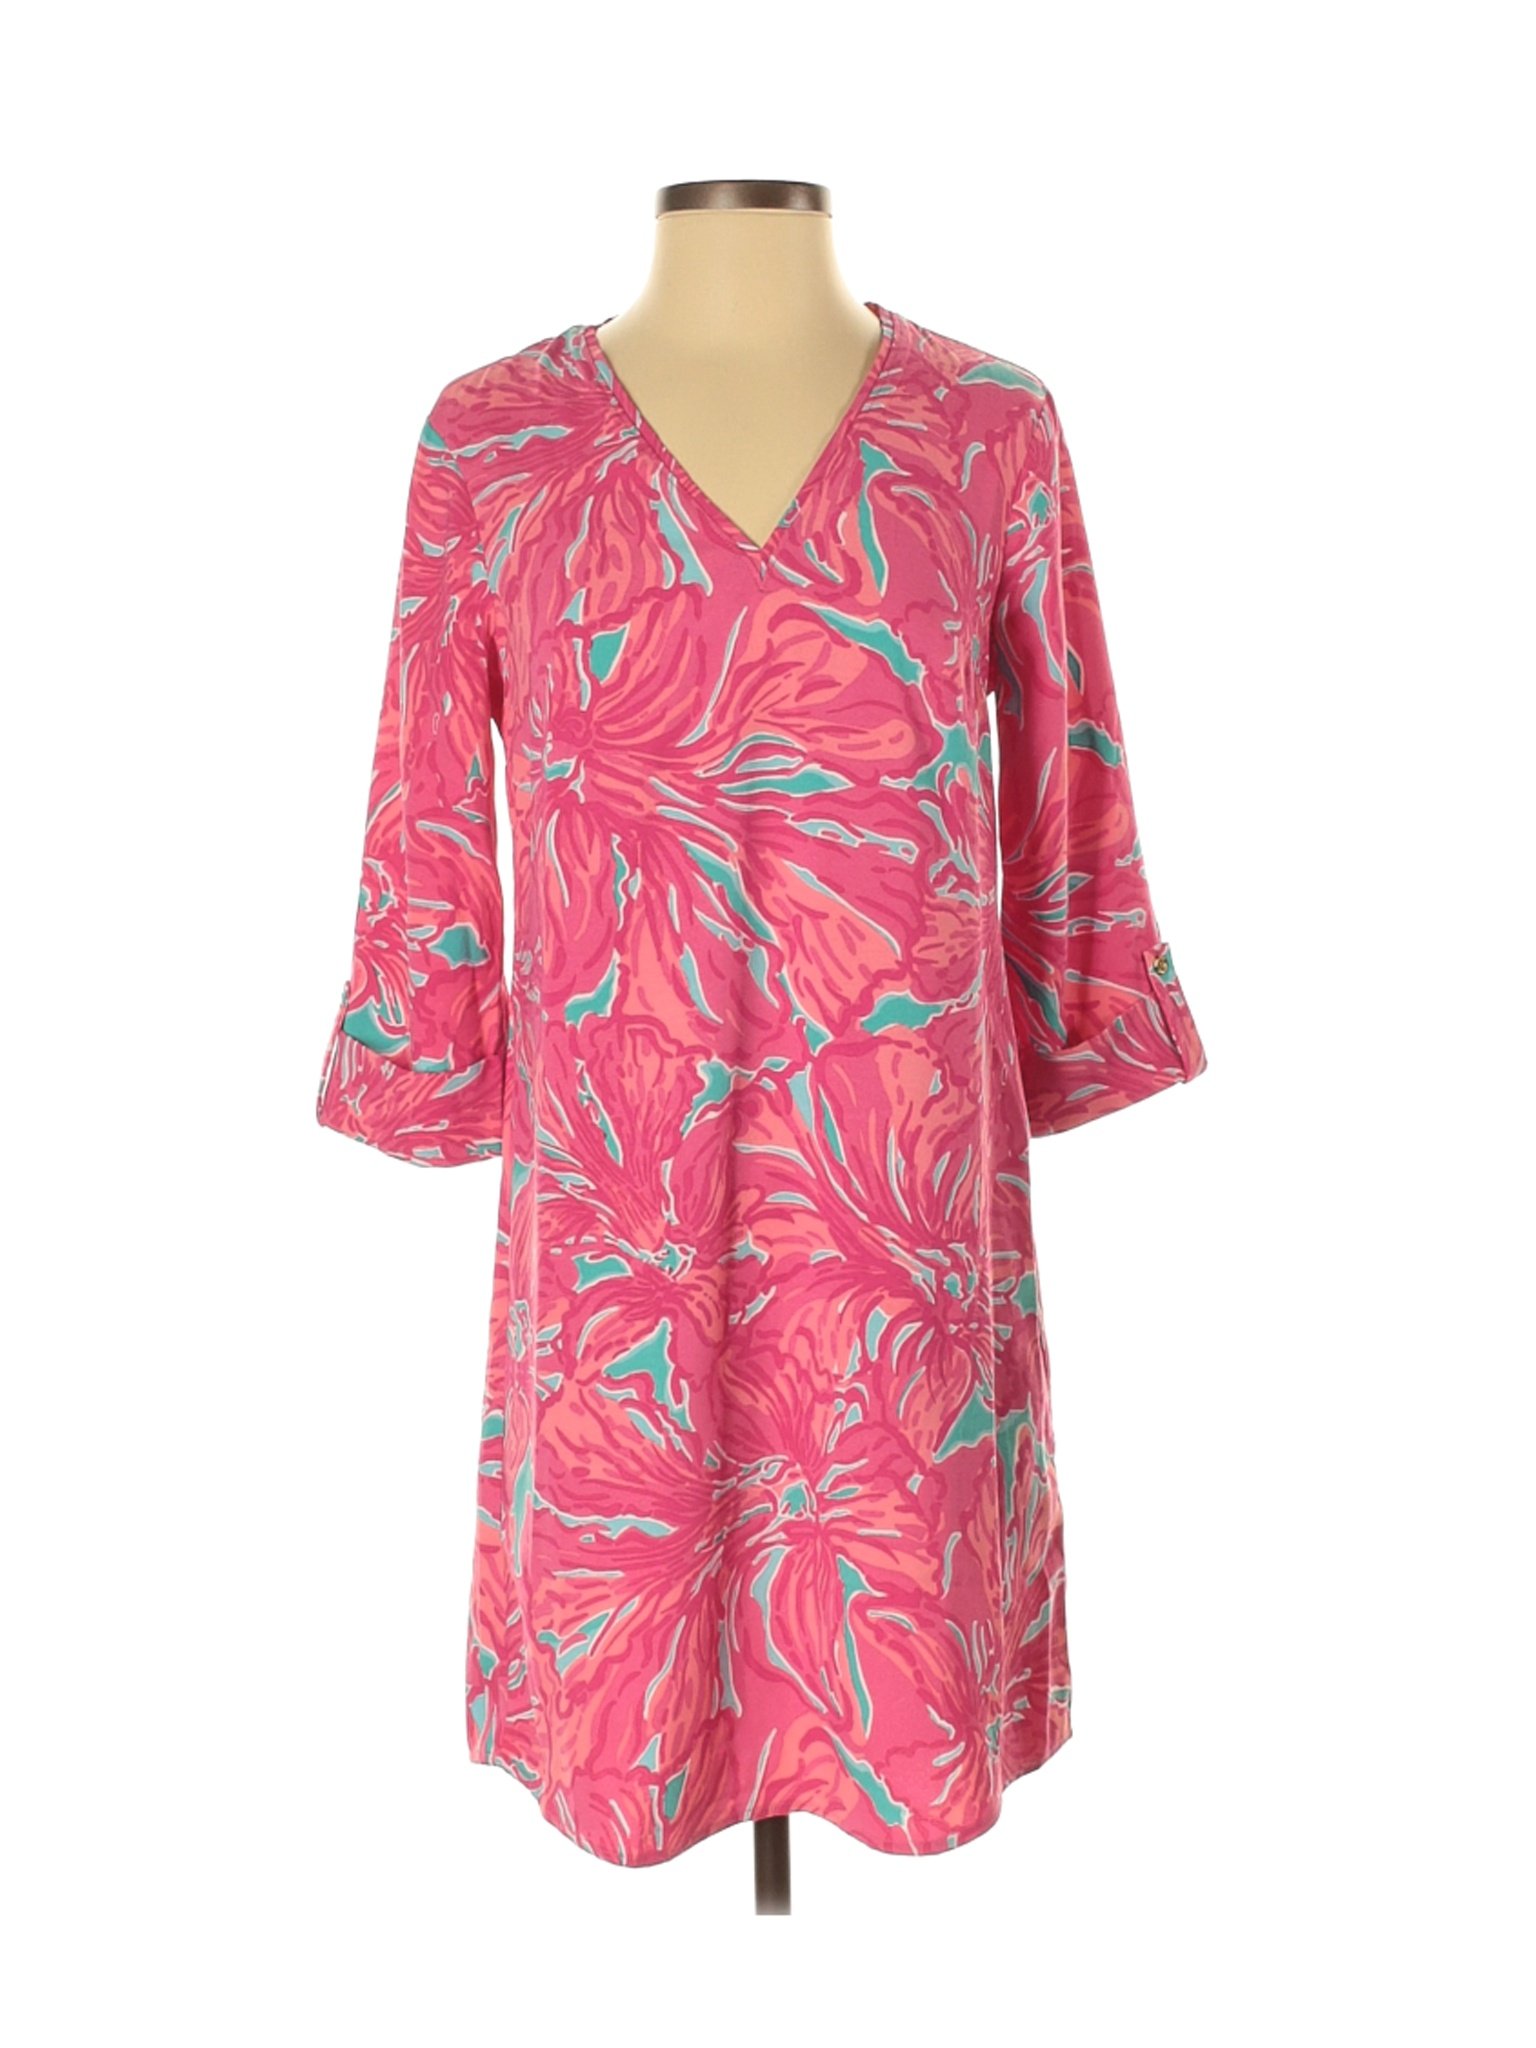 NWT Lilly Pulitzer Women Pink Casual Dress XS | eBay